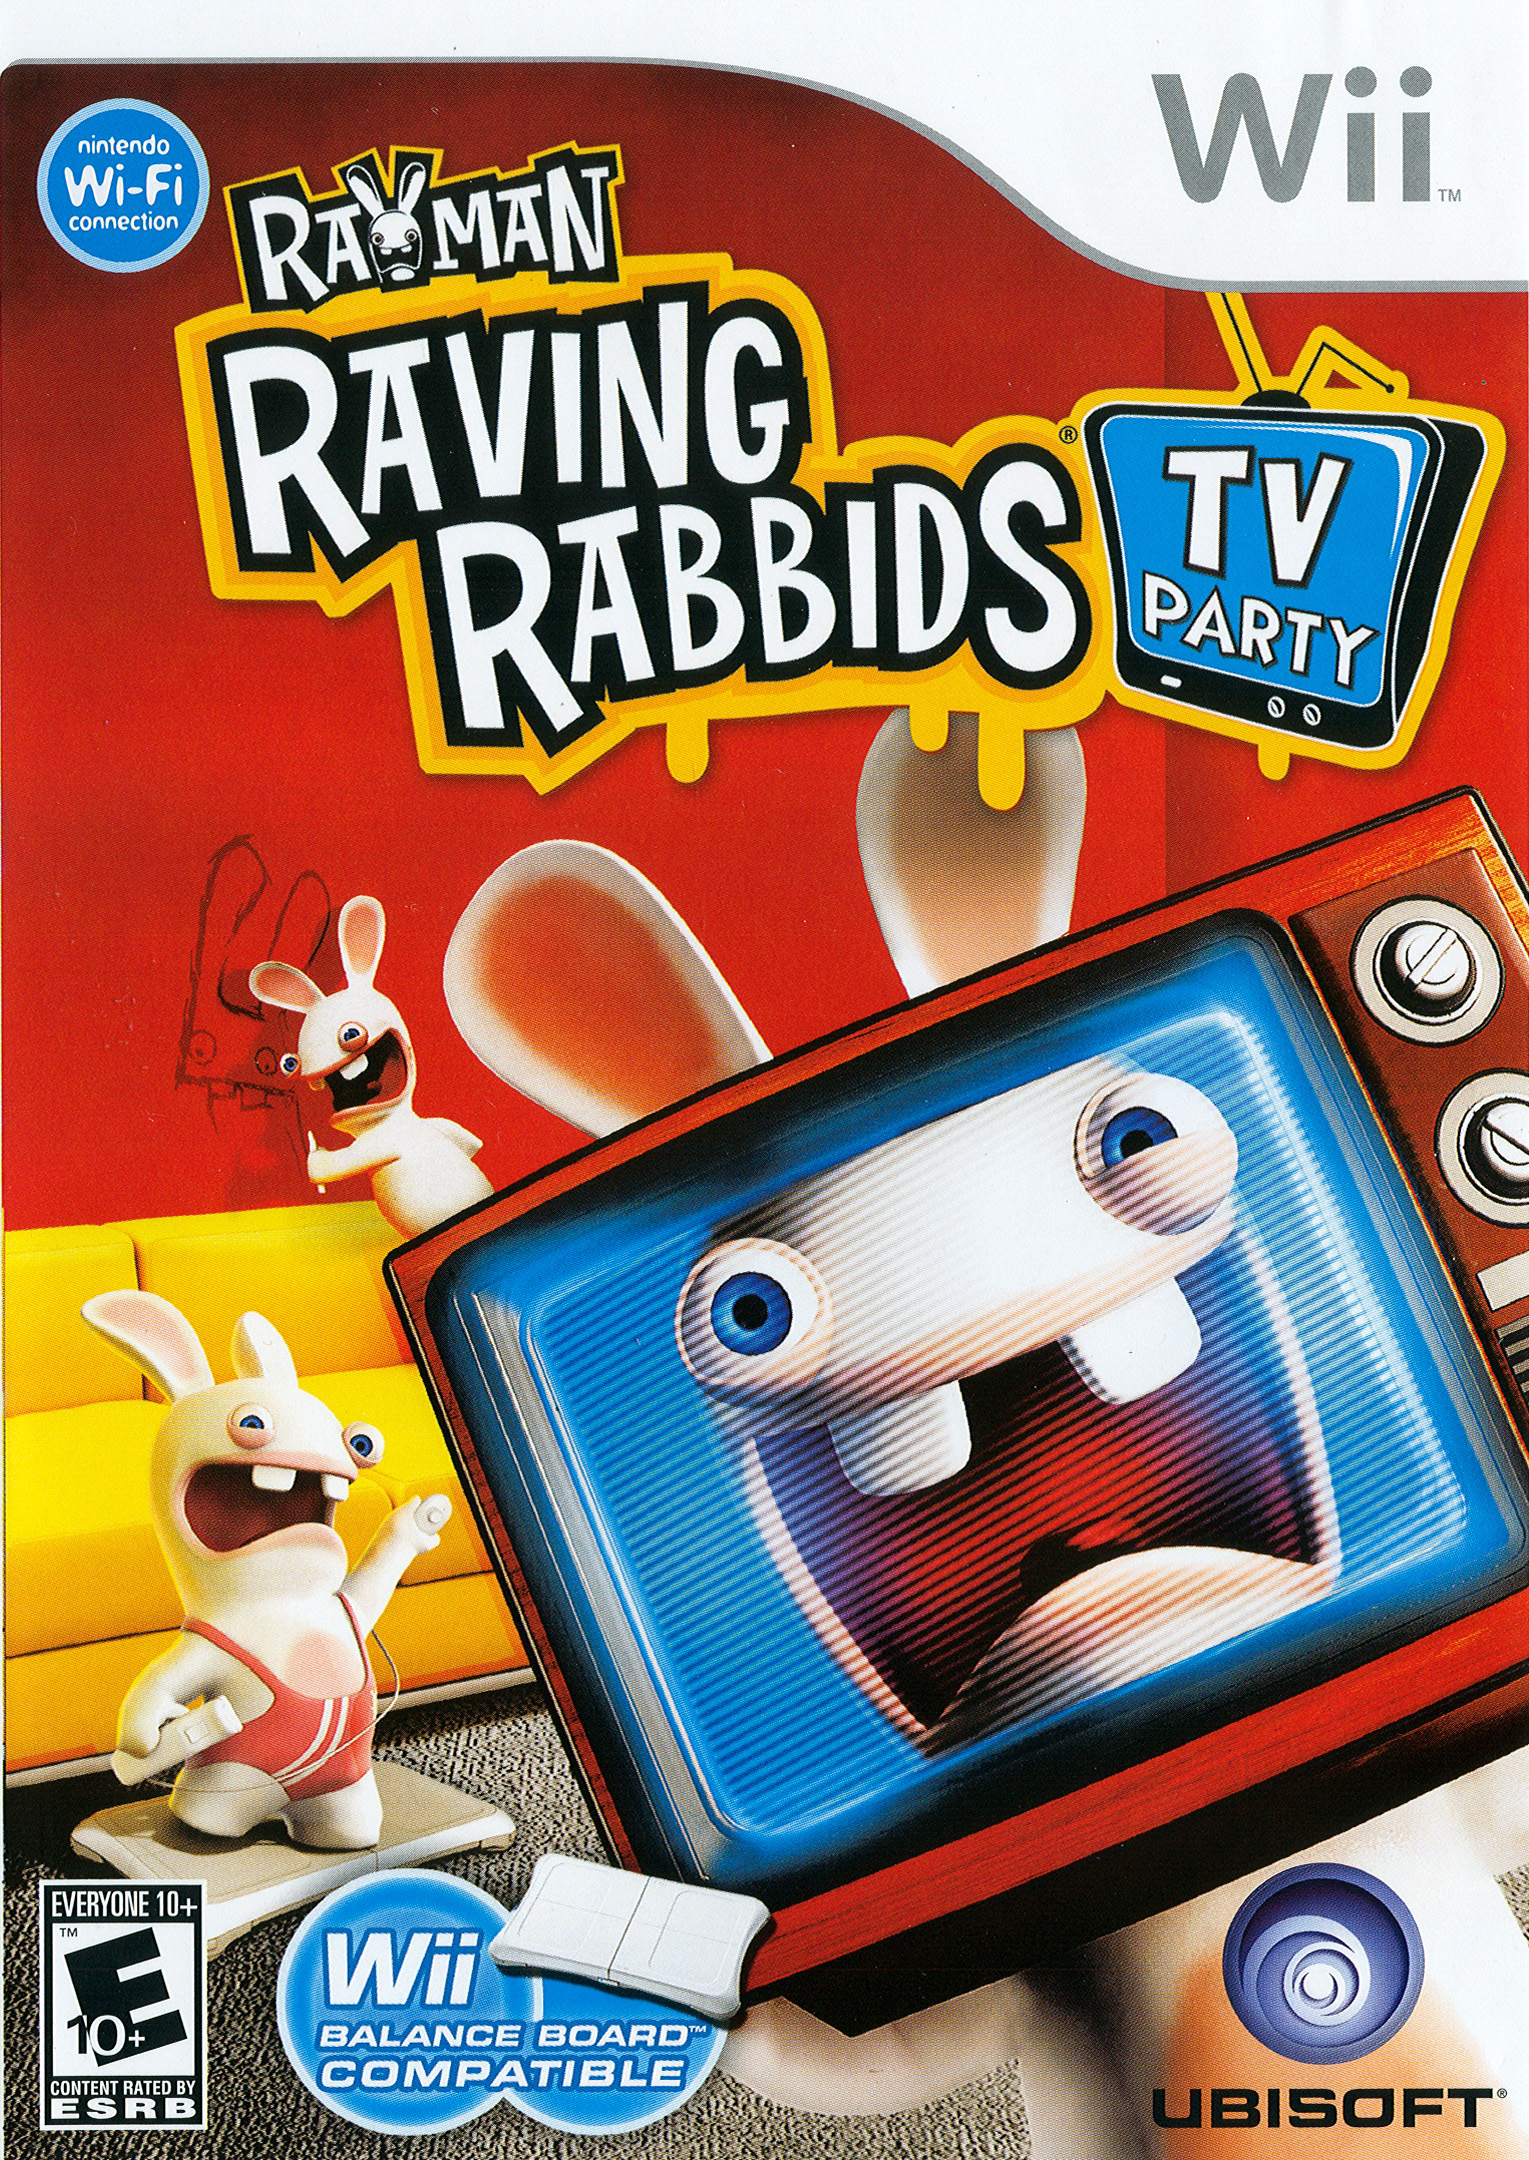 rayman raving rabbids tv party adverisment